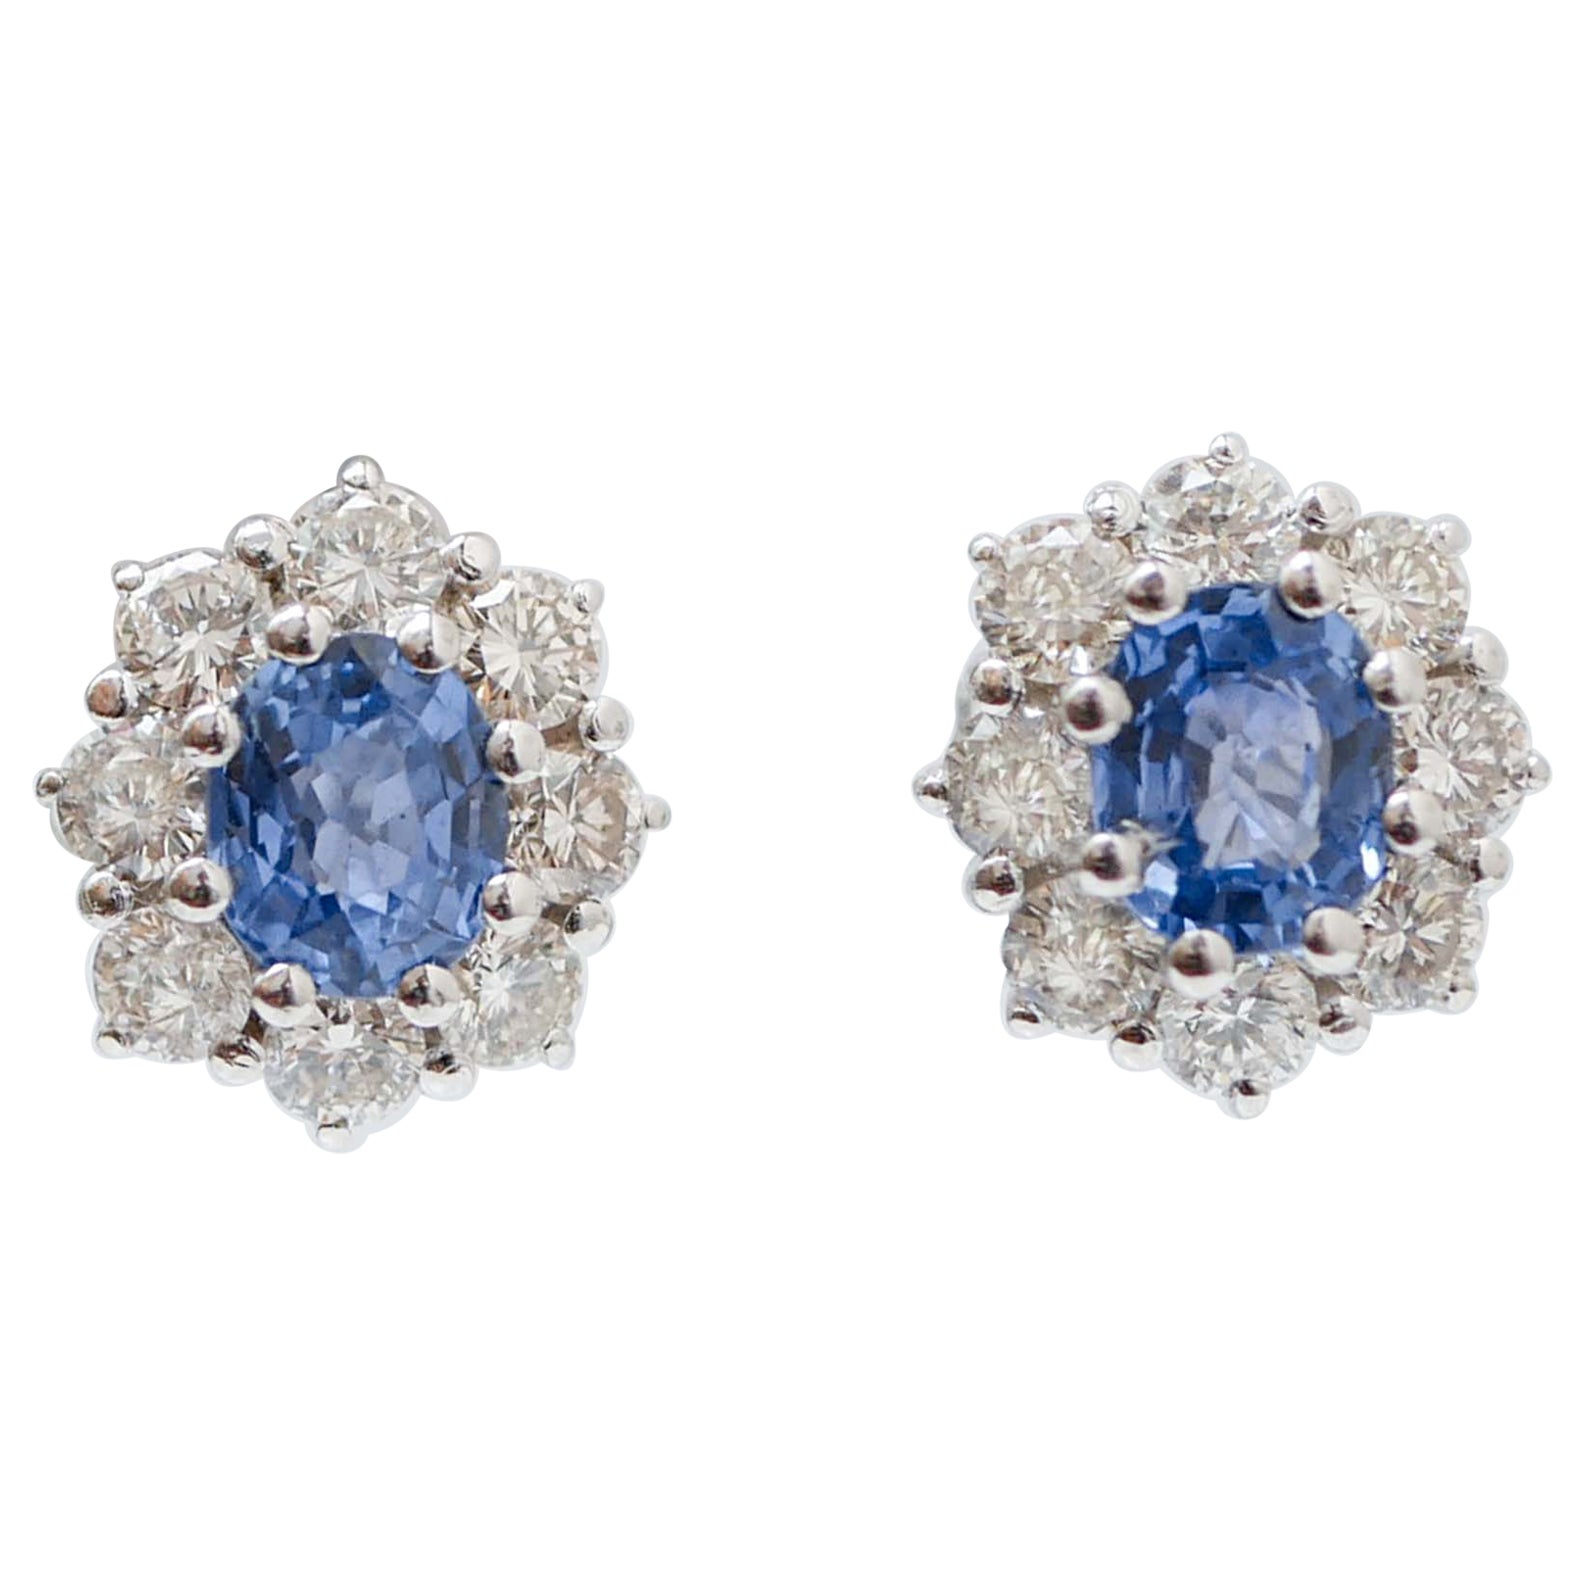 Sapphires, Diamonds, Platinum Earrings.